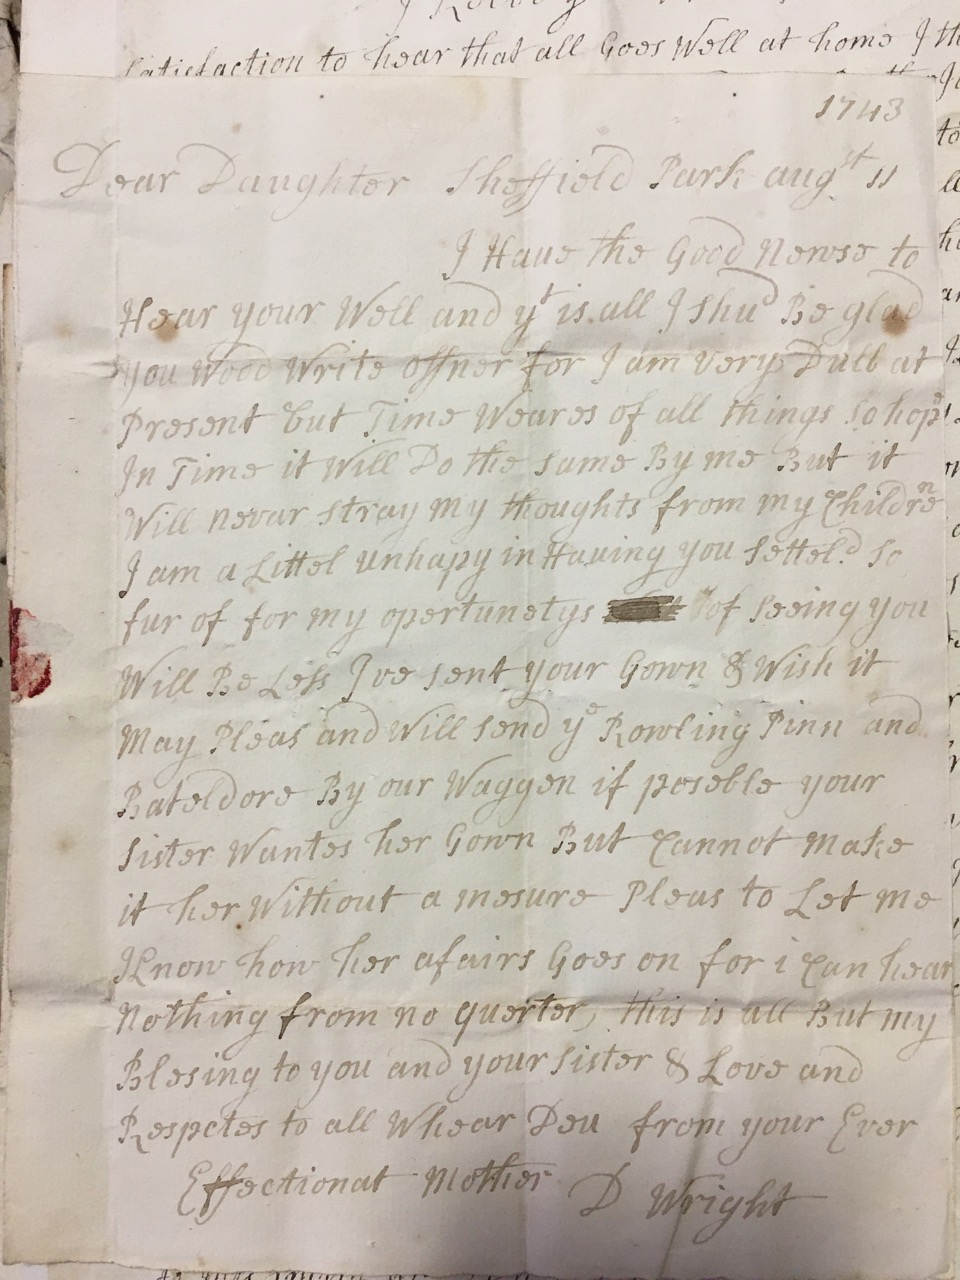 Image #1 of letter: Dorothy Wright to Catherine Elliott, 11 August 1743